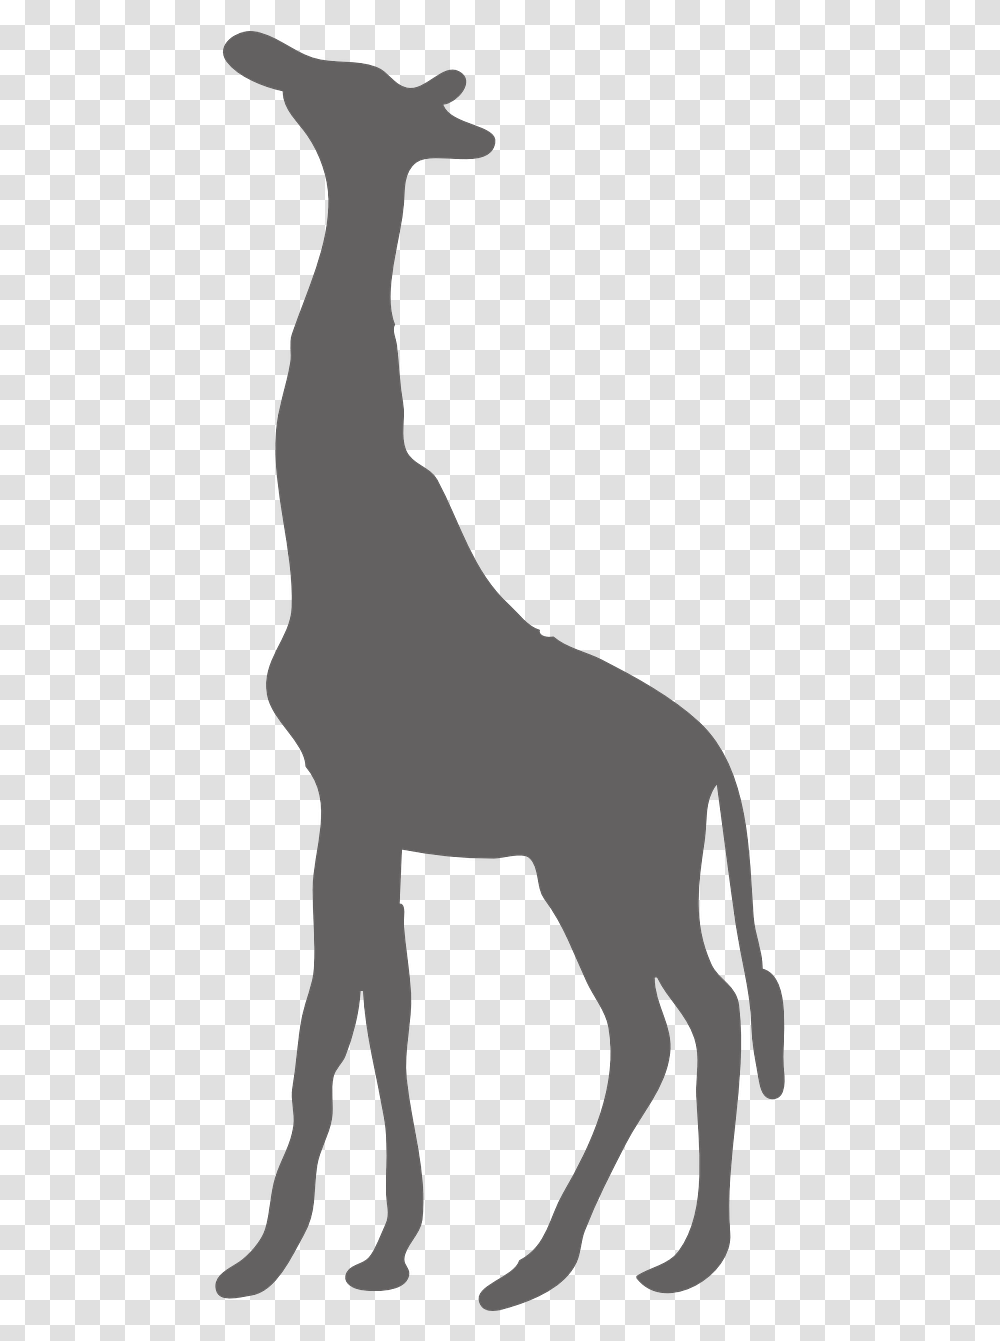 Wild Animal Safari Image Clipart Giraffe Silhouette, Mammal, Statue, Sculpture, Wildlife Transparent Png